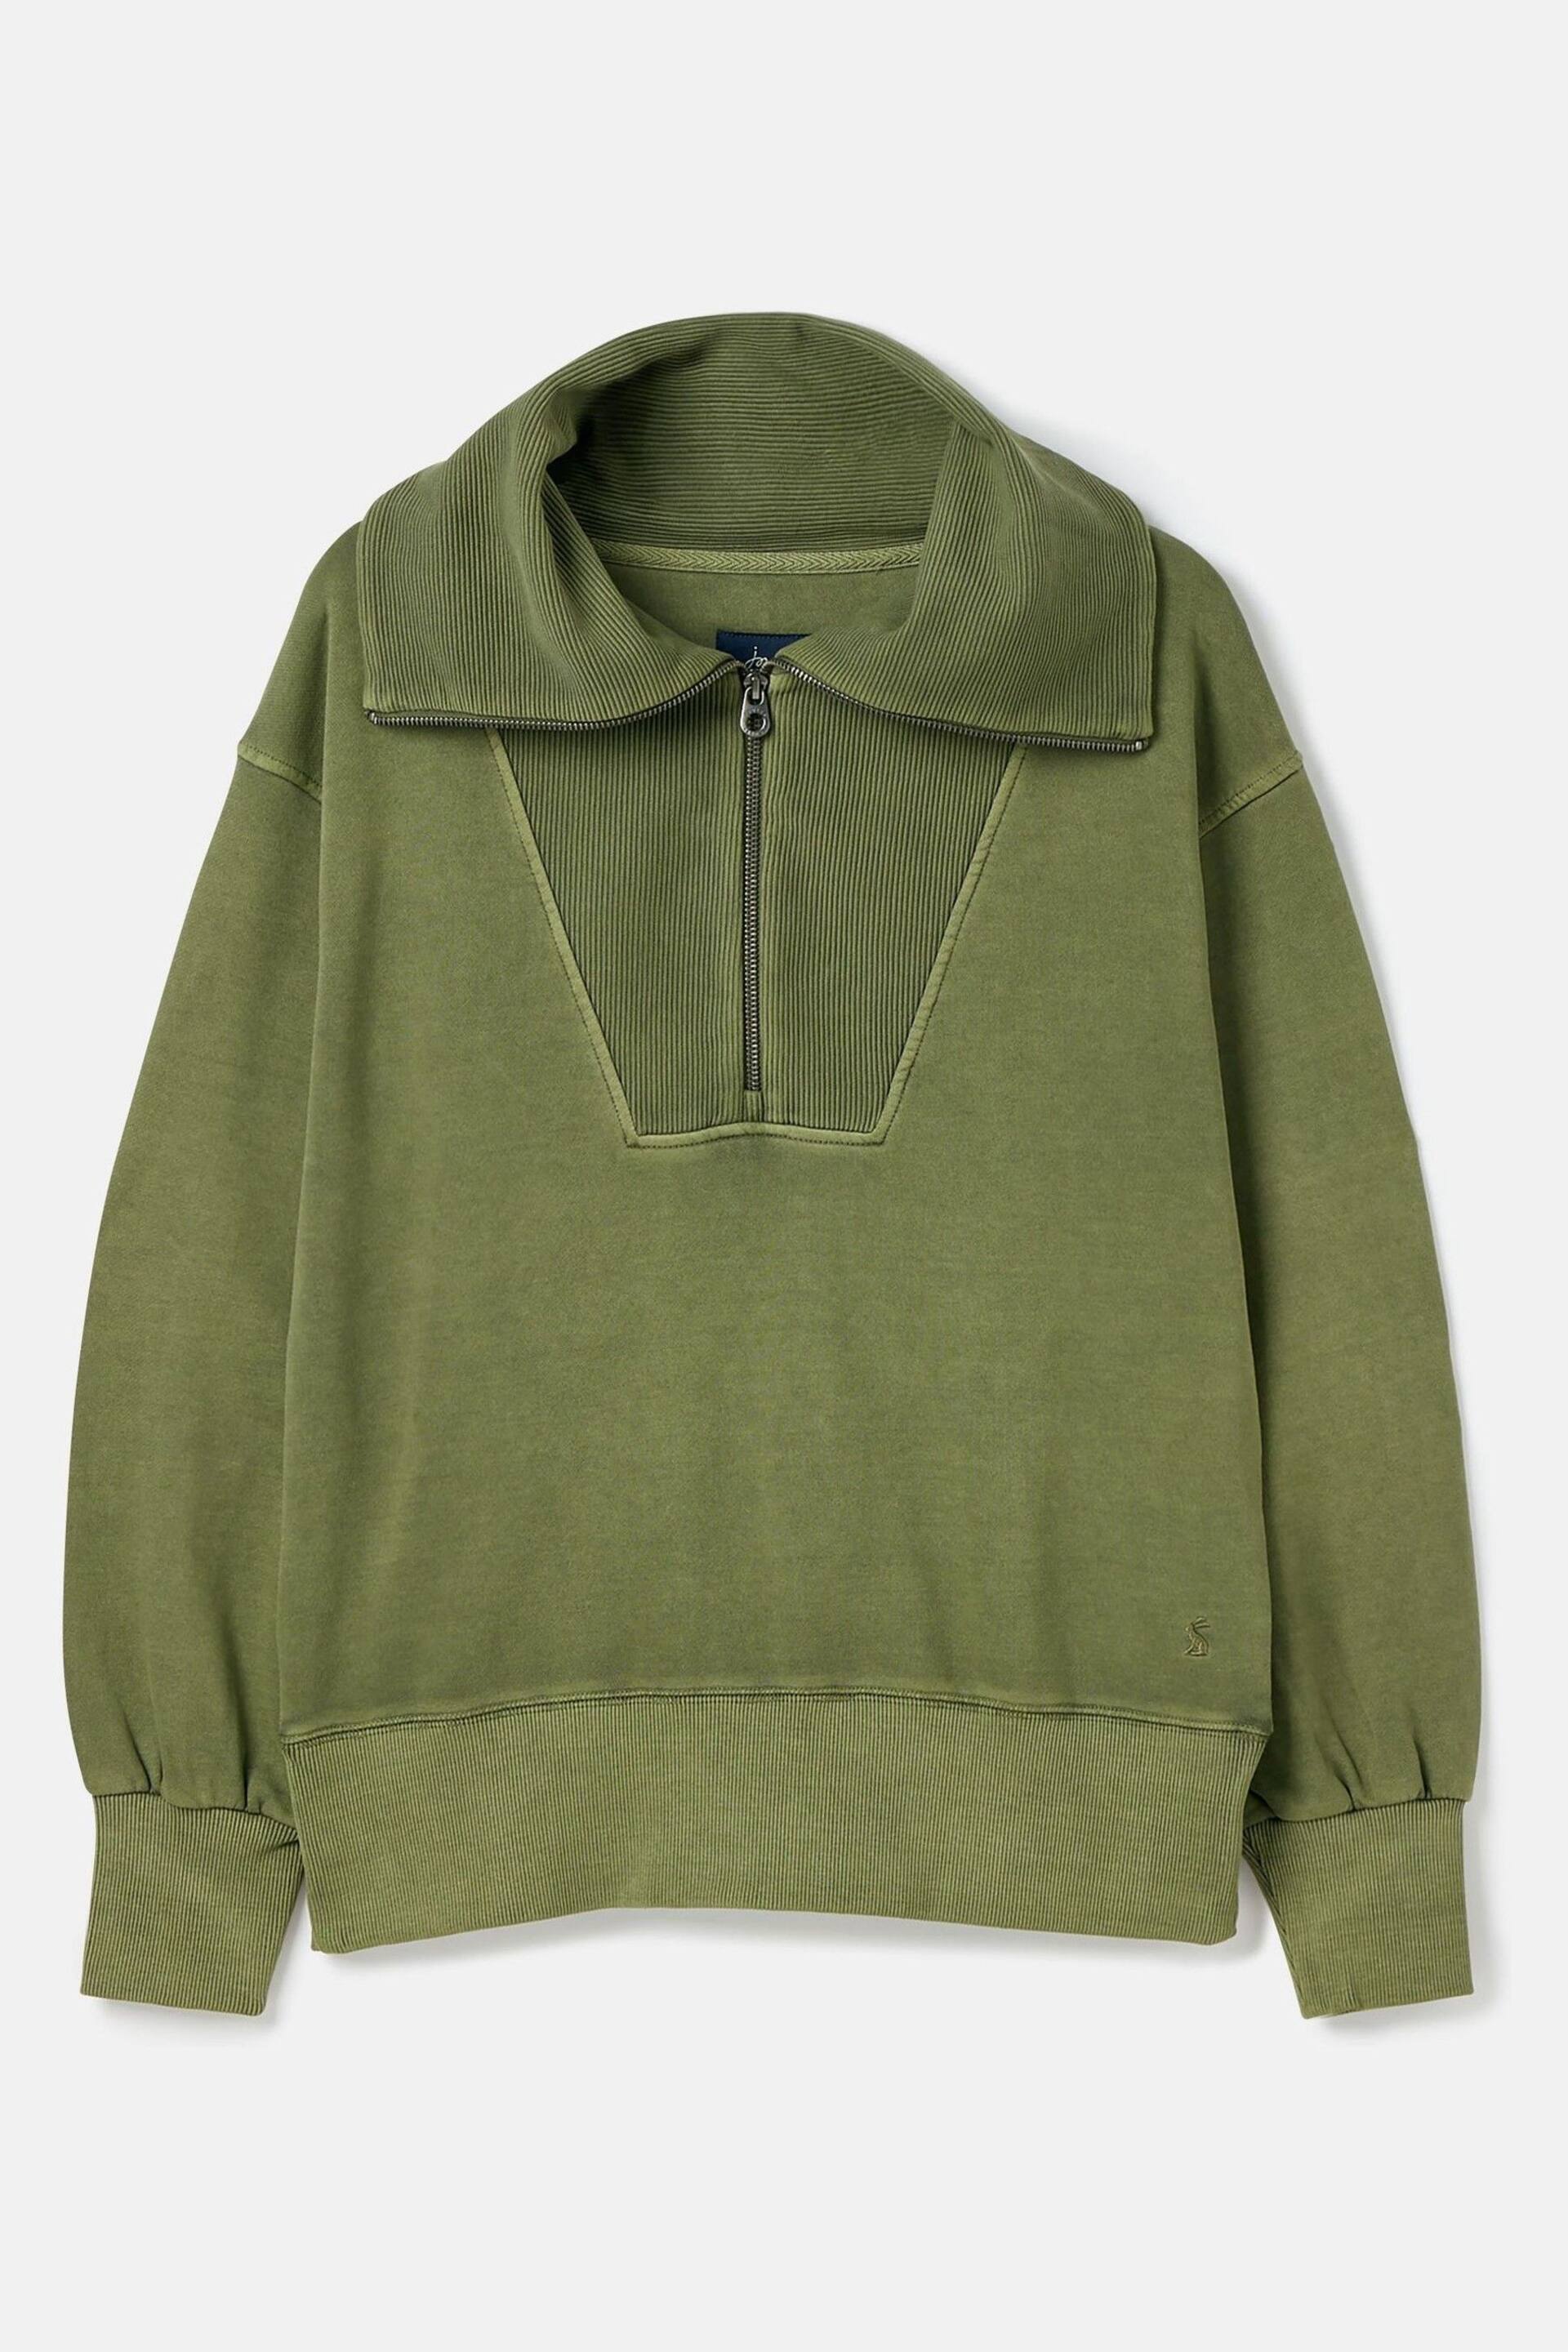 Joules Tia Green Pullover Sweatshirt - Image 6 of 6